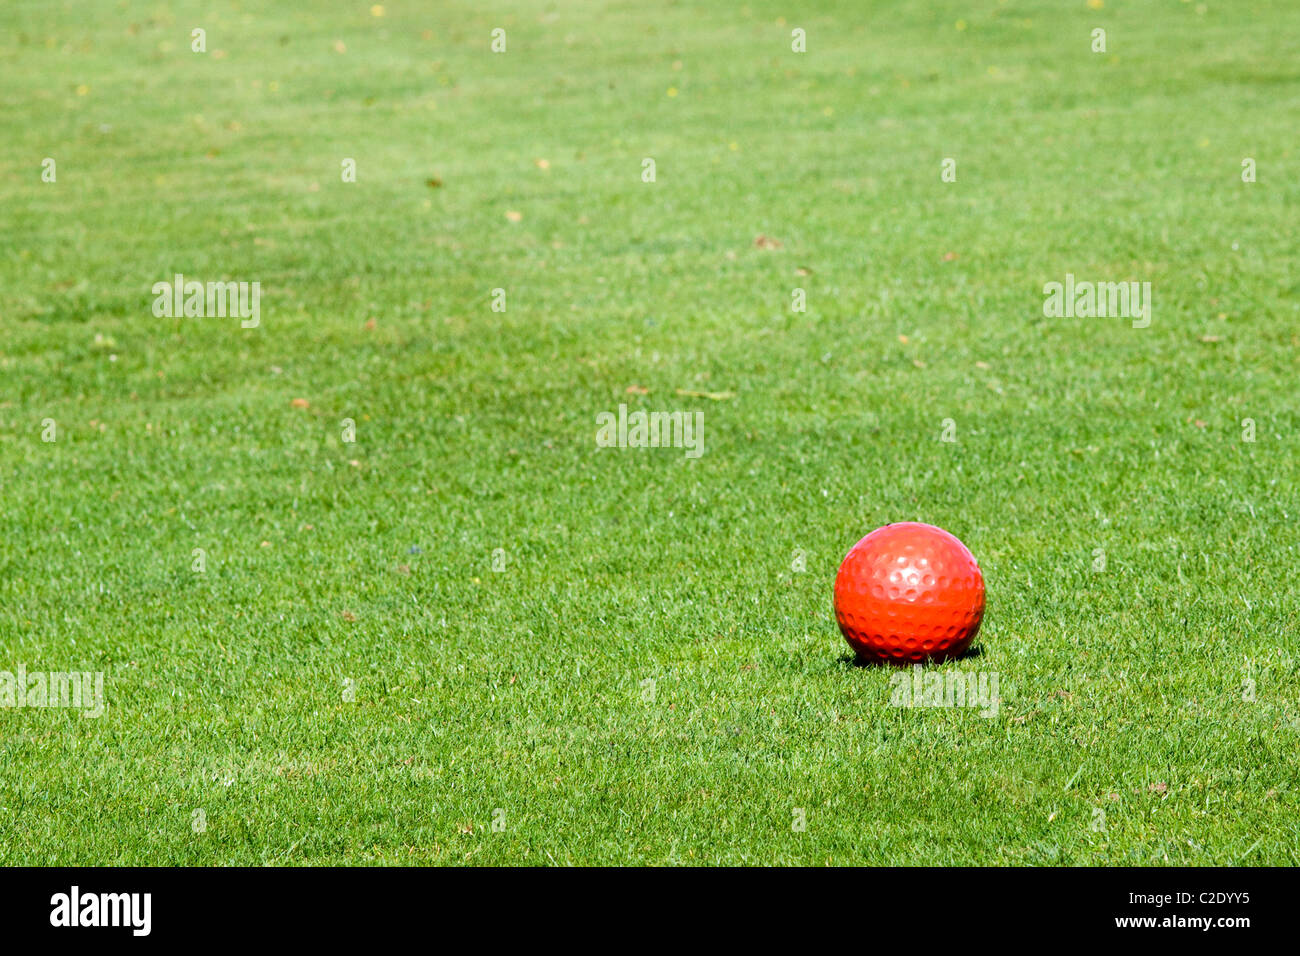 https://c8.alamy.com/comp/C2DYY5/giant-red-golf-ball-on-the-green-C2DYY5.jpg